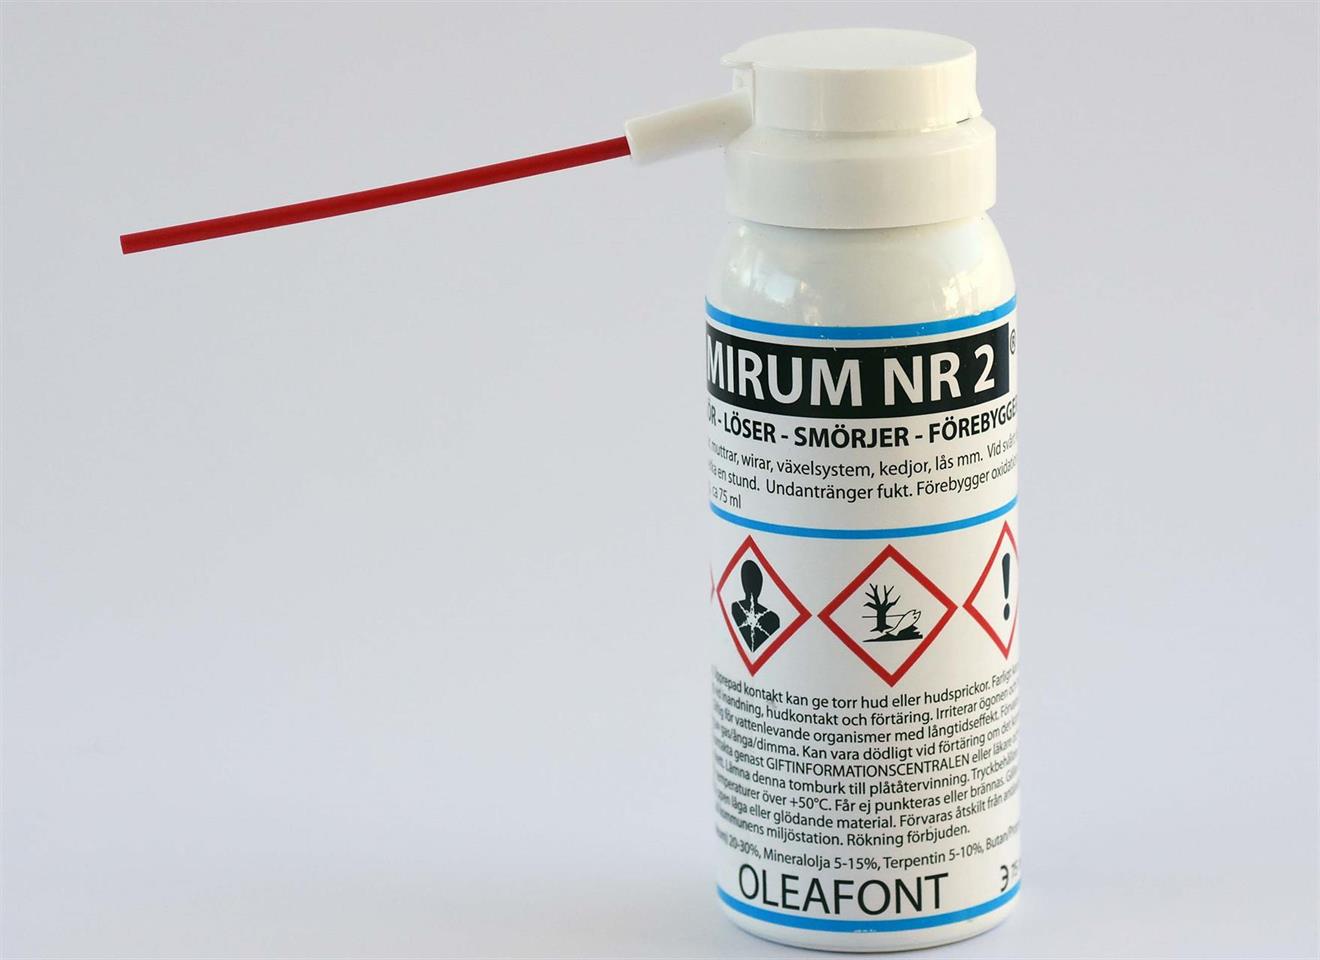 MIRUM NR 2 Spray 75ml